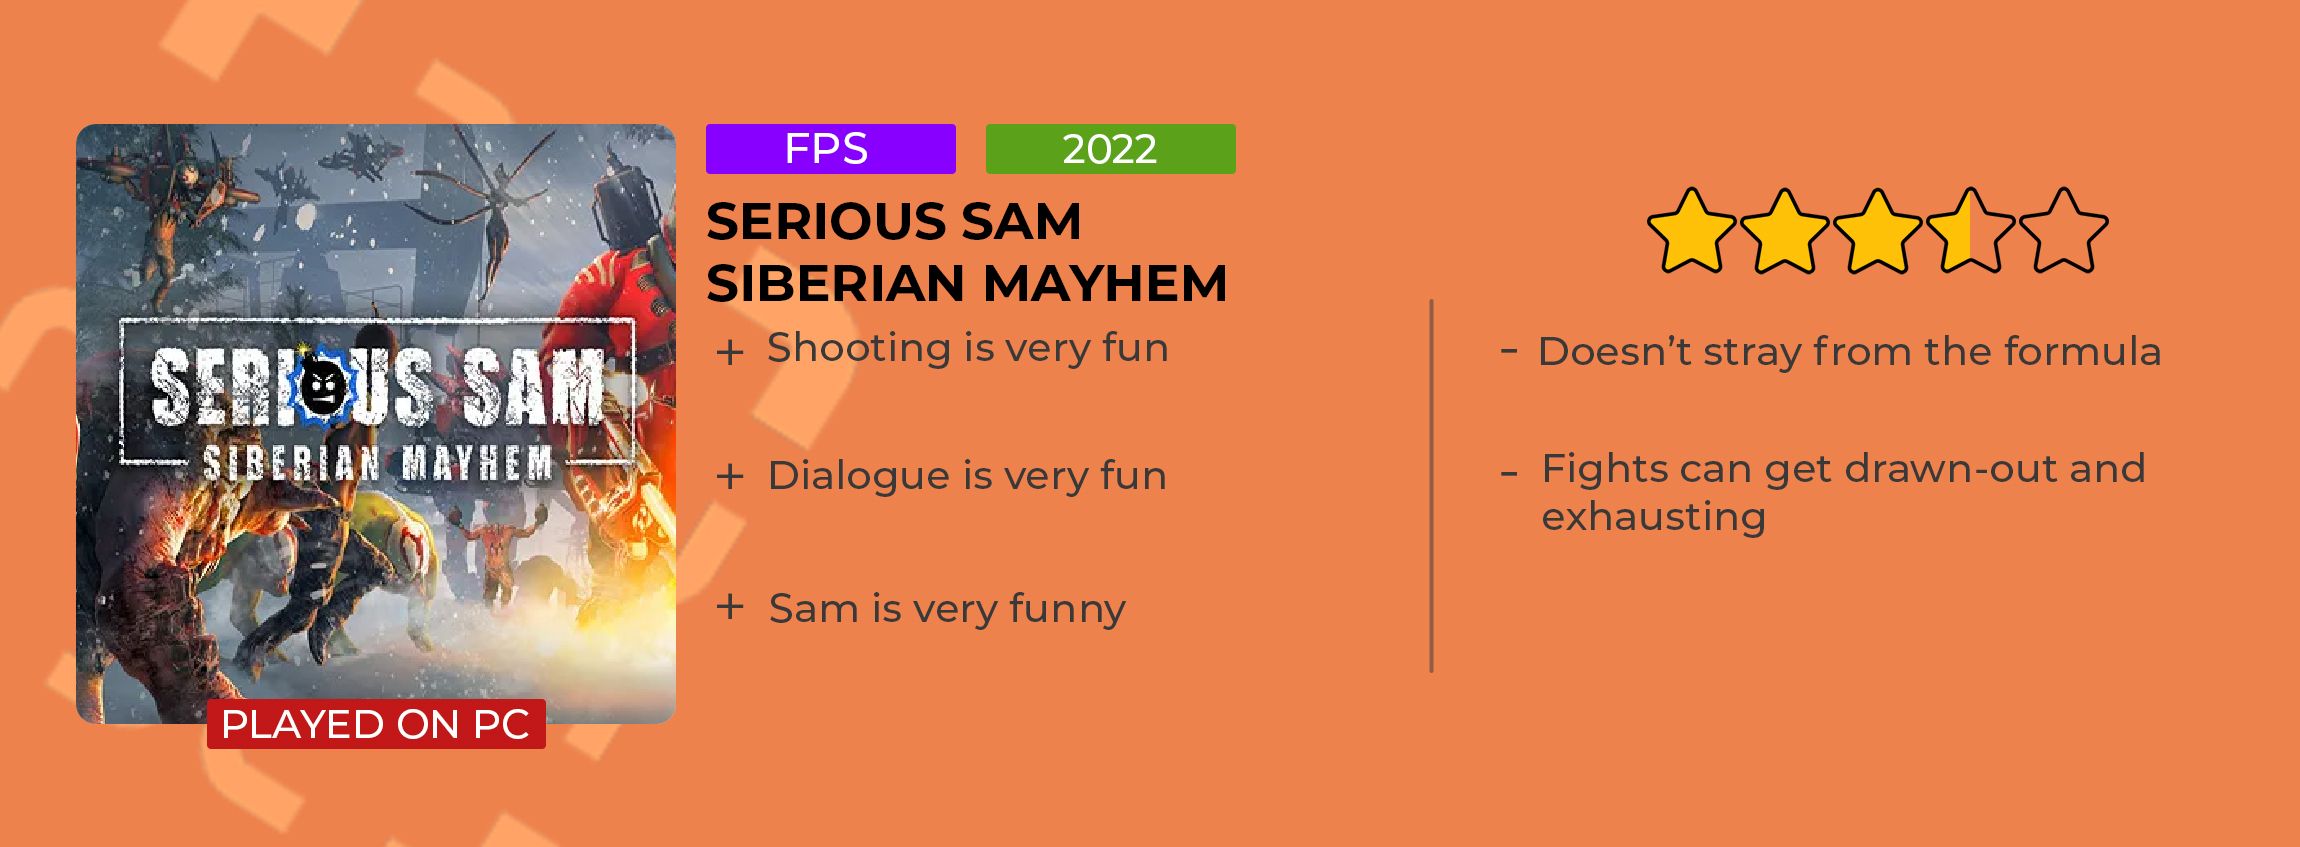 Serious Sam review card